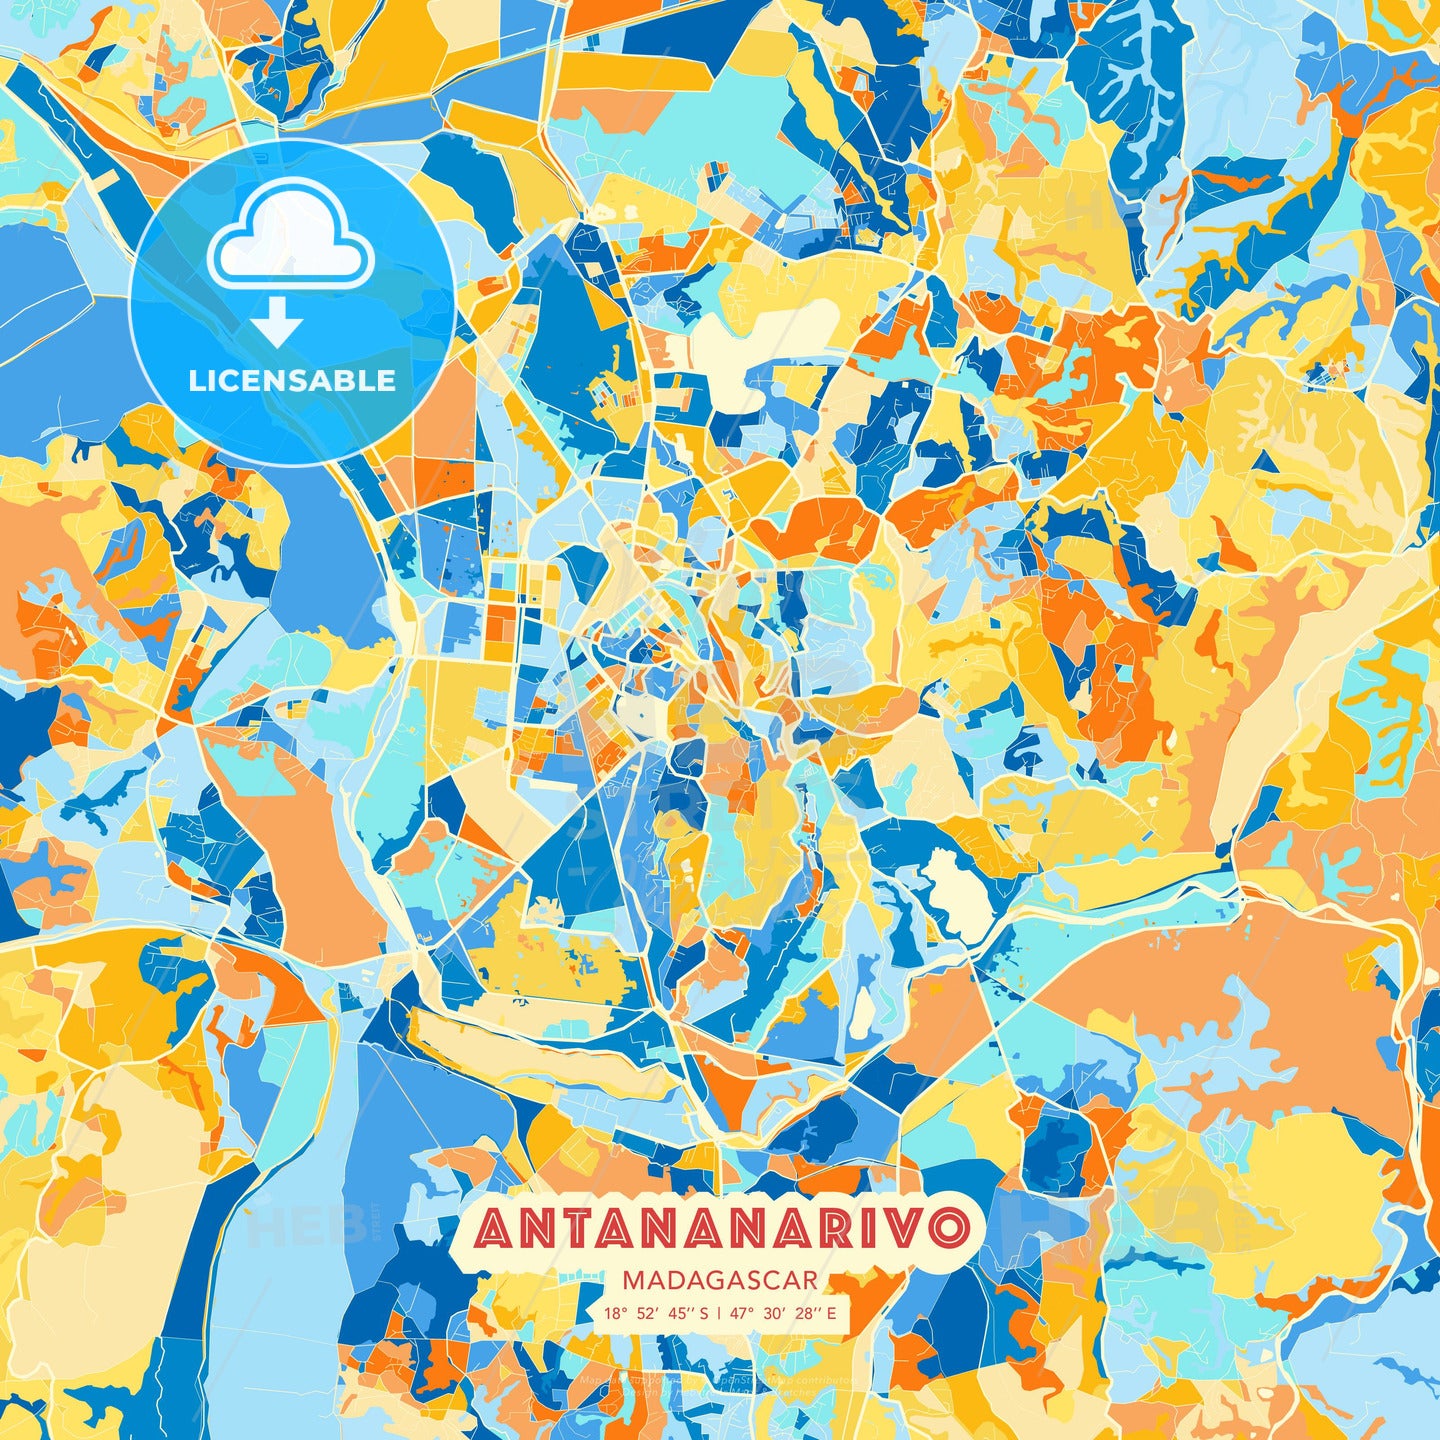 Antananarivo, Madagascar, map - HEBSTREITS Sketches